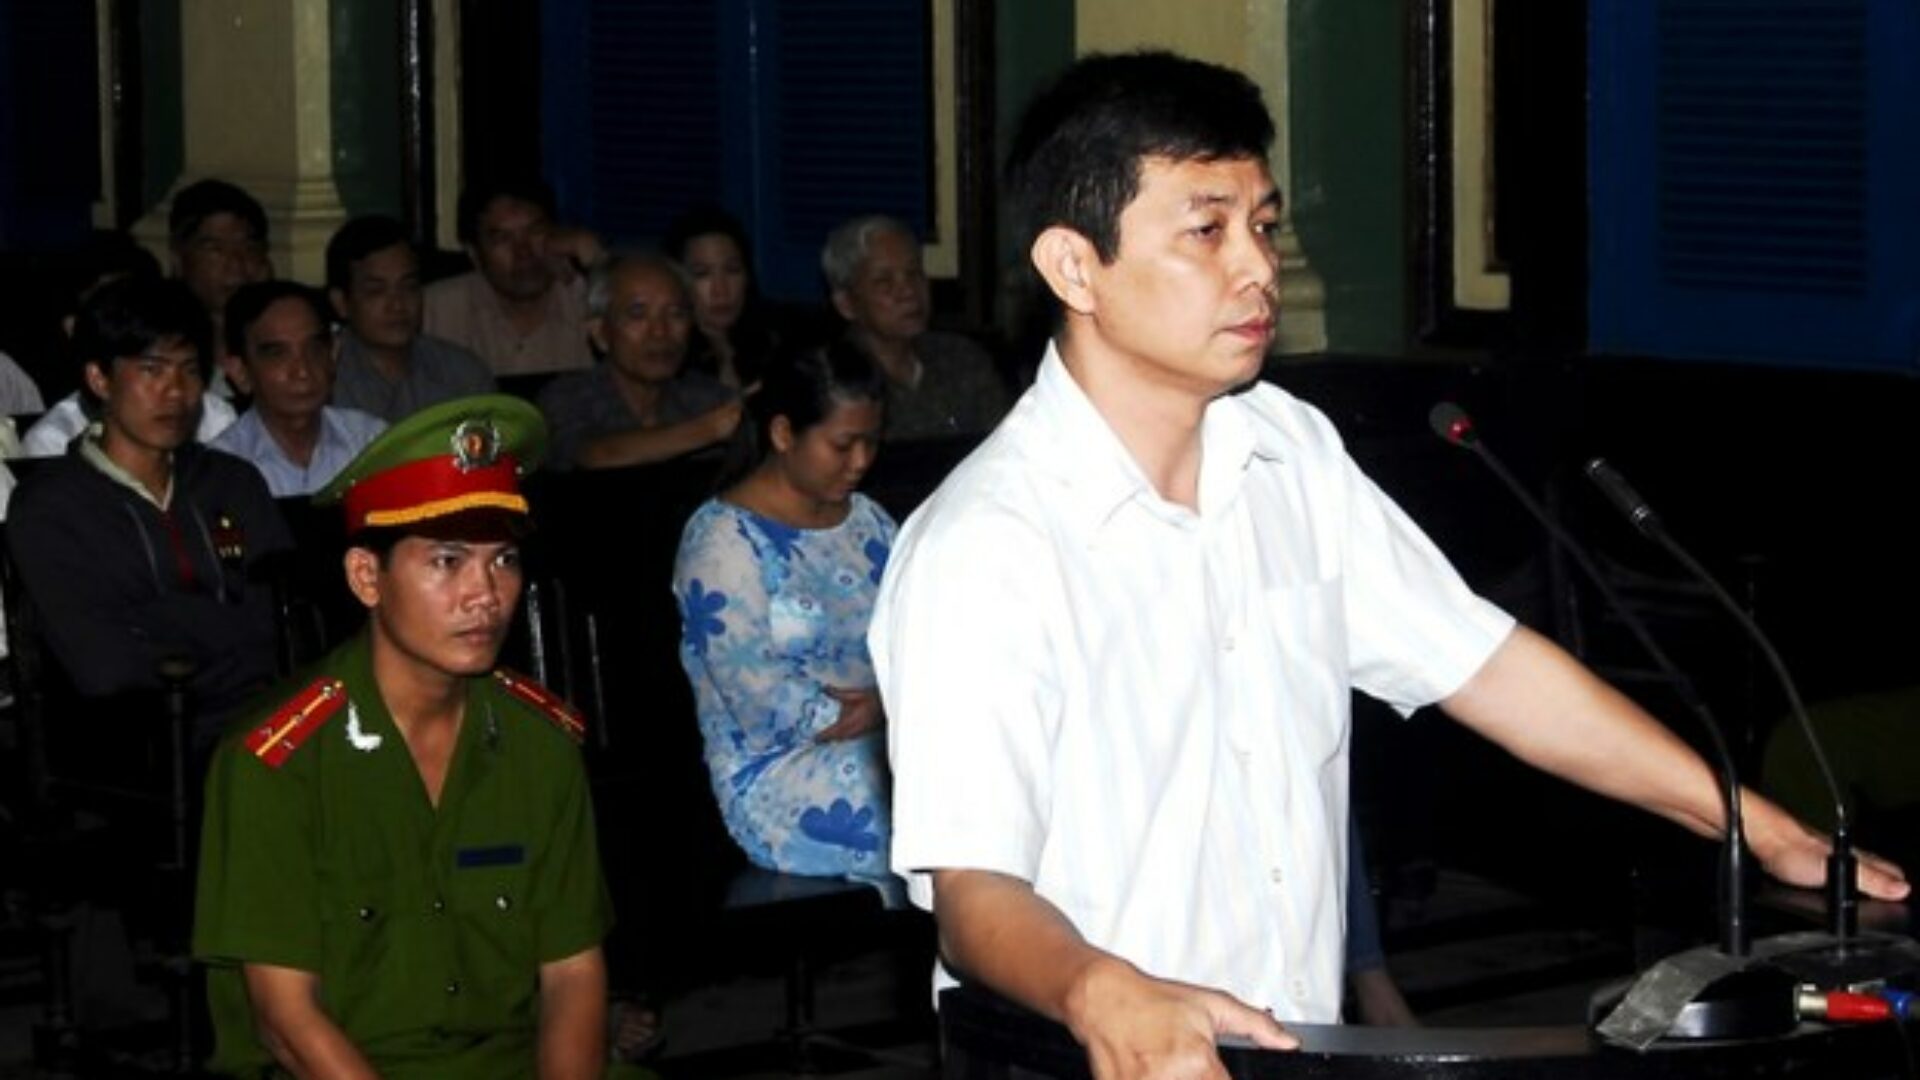 Amnesty International: Open letter on Prisoner of Conscience Trần Huỳnh Duy Thức